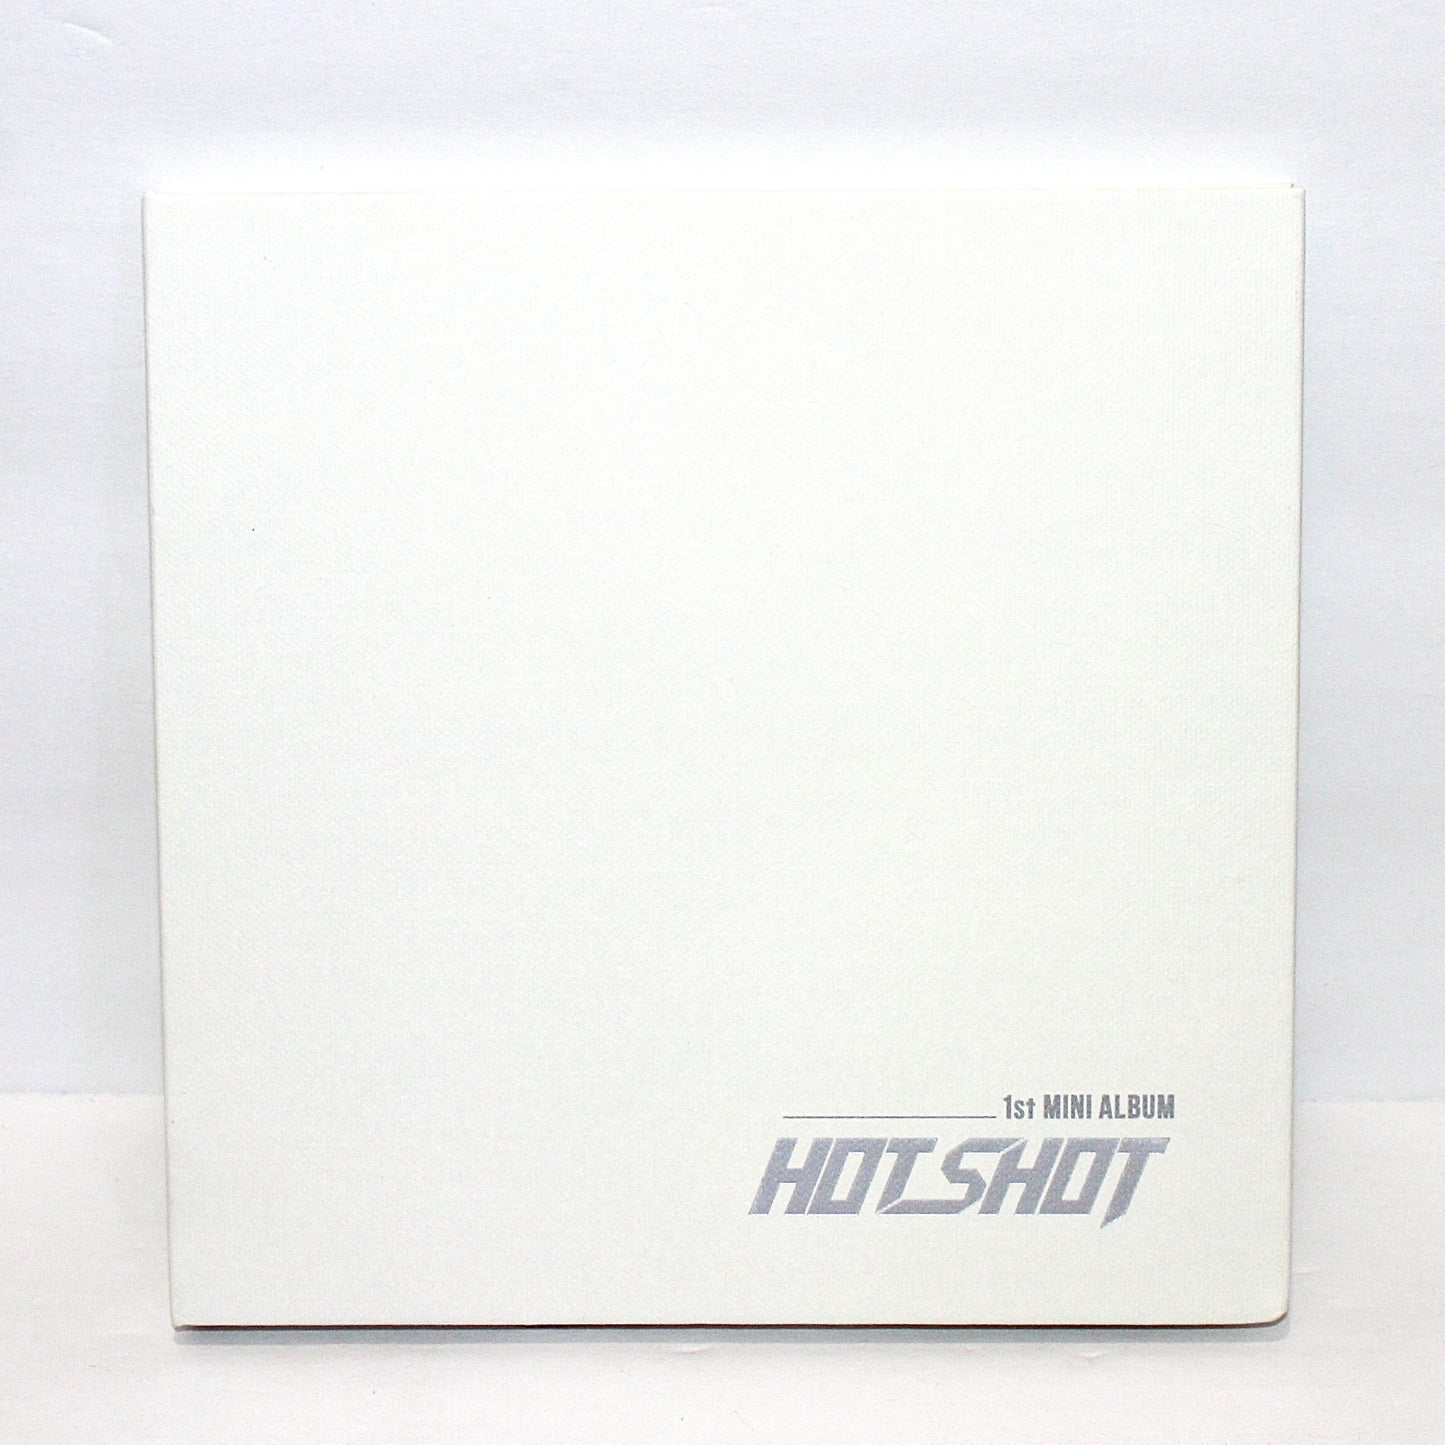 HOTSHOT 1st Mini Album Repackage: I'm A Hotshot